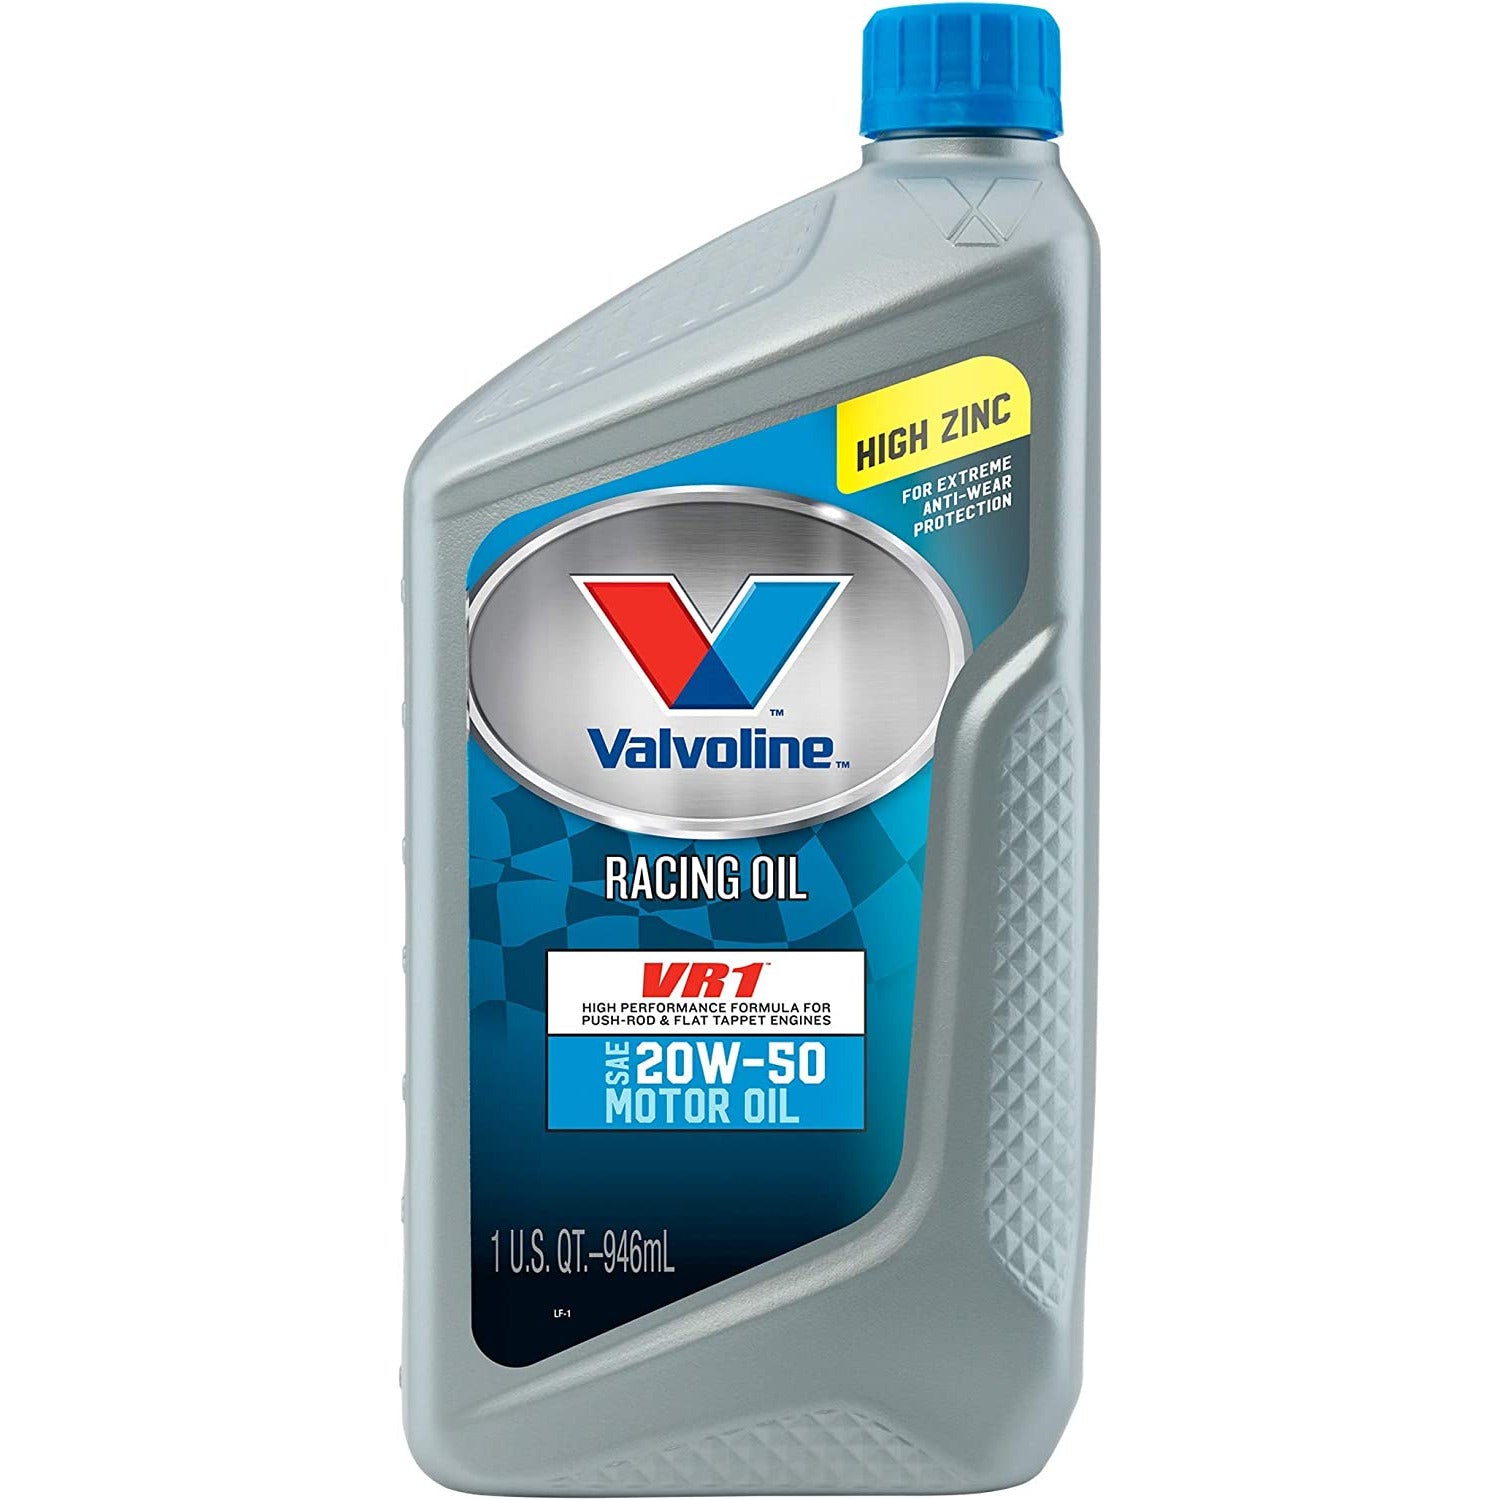 VAL VV211 | Valvoline VR1 20W-50 High Performance High Zinc Motor Oil : 1 QT